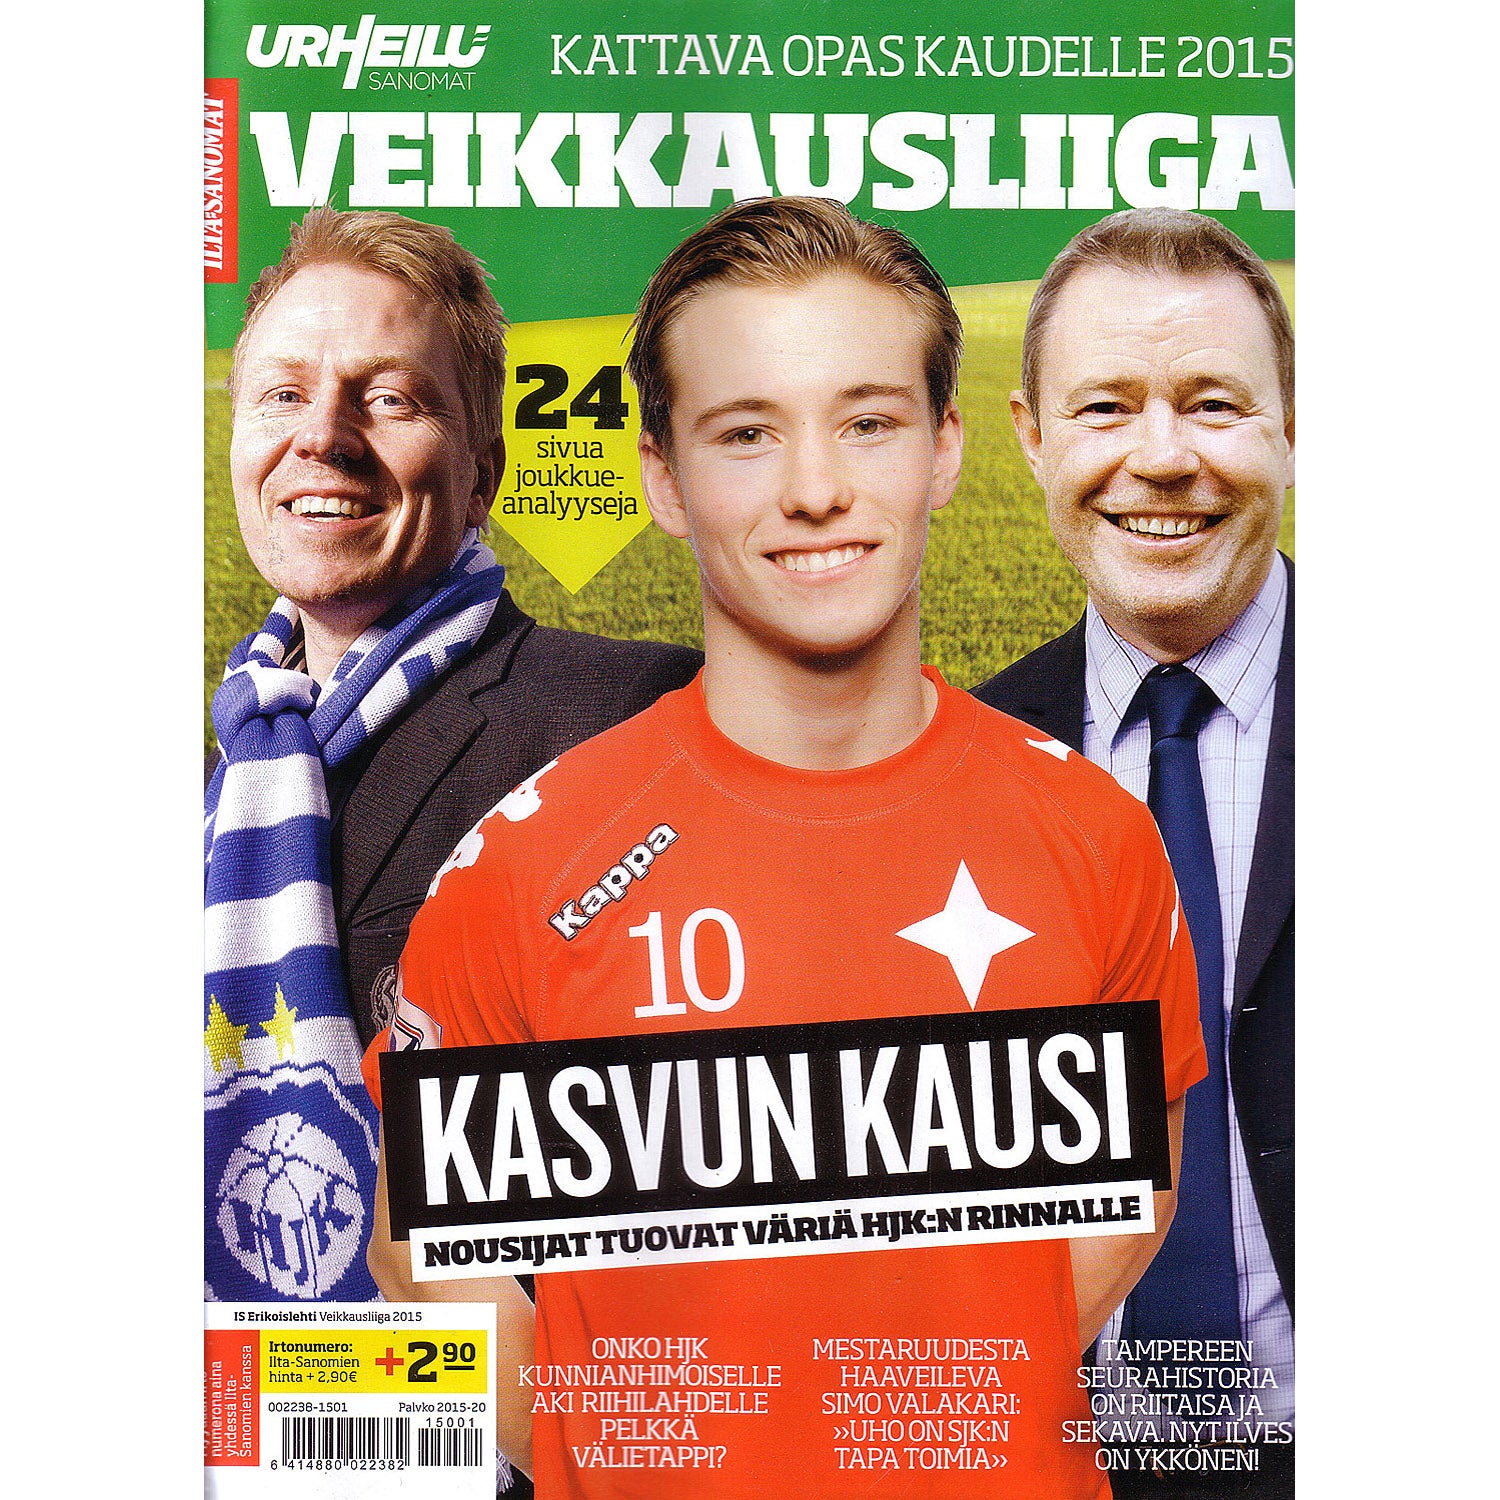 Urheilu Sanomat Veikkausliiga 2015 (Finland Season Preview)